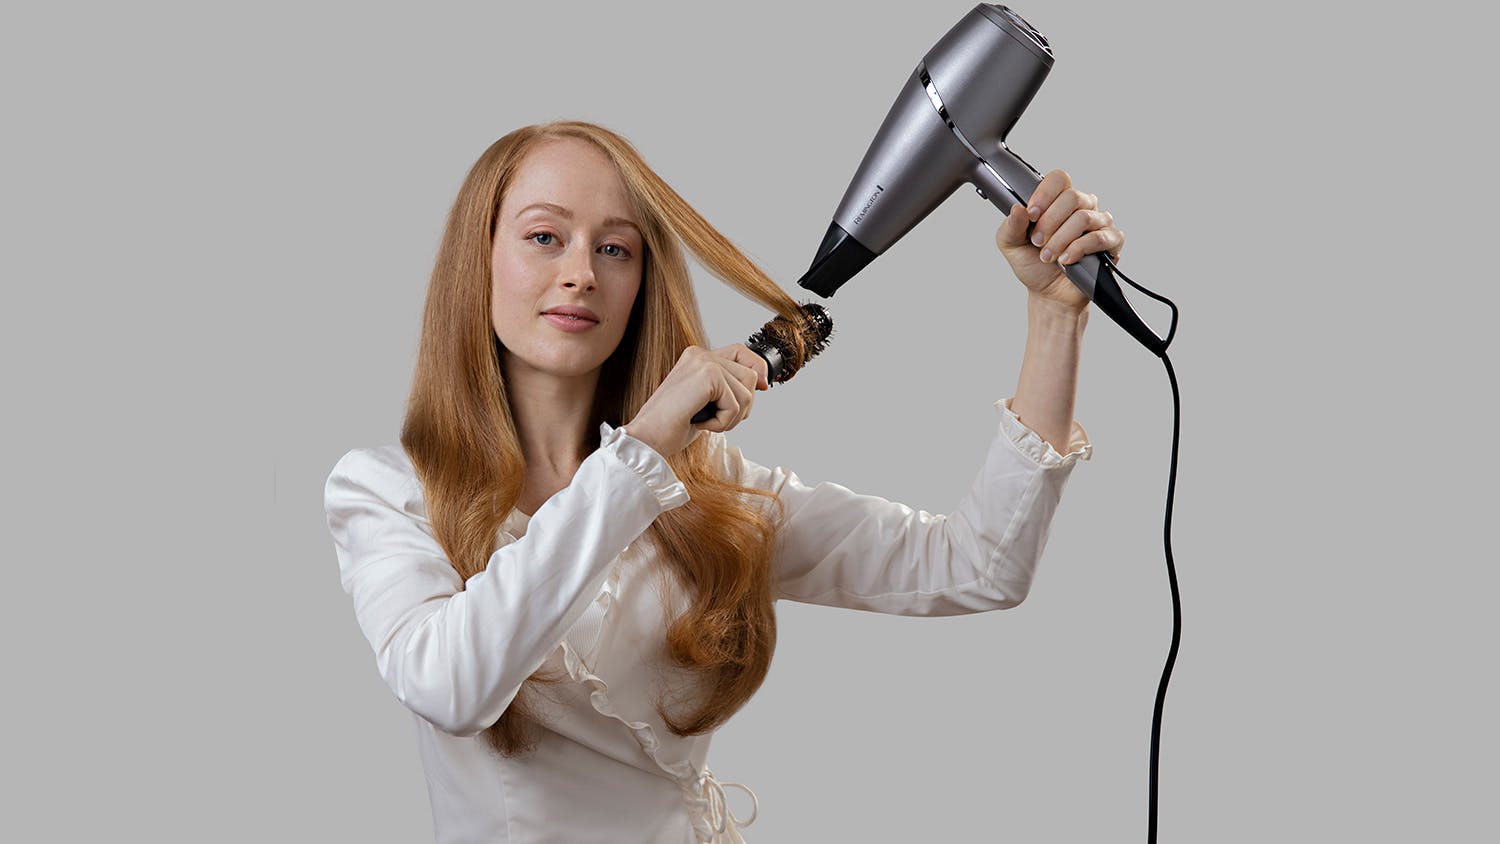 Remington Proluxe You Adaptive Hair Dryer